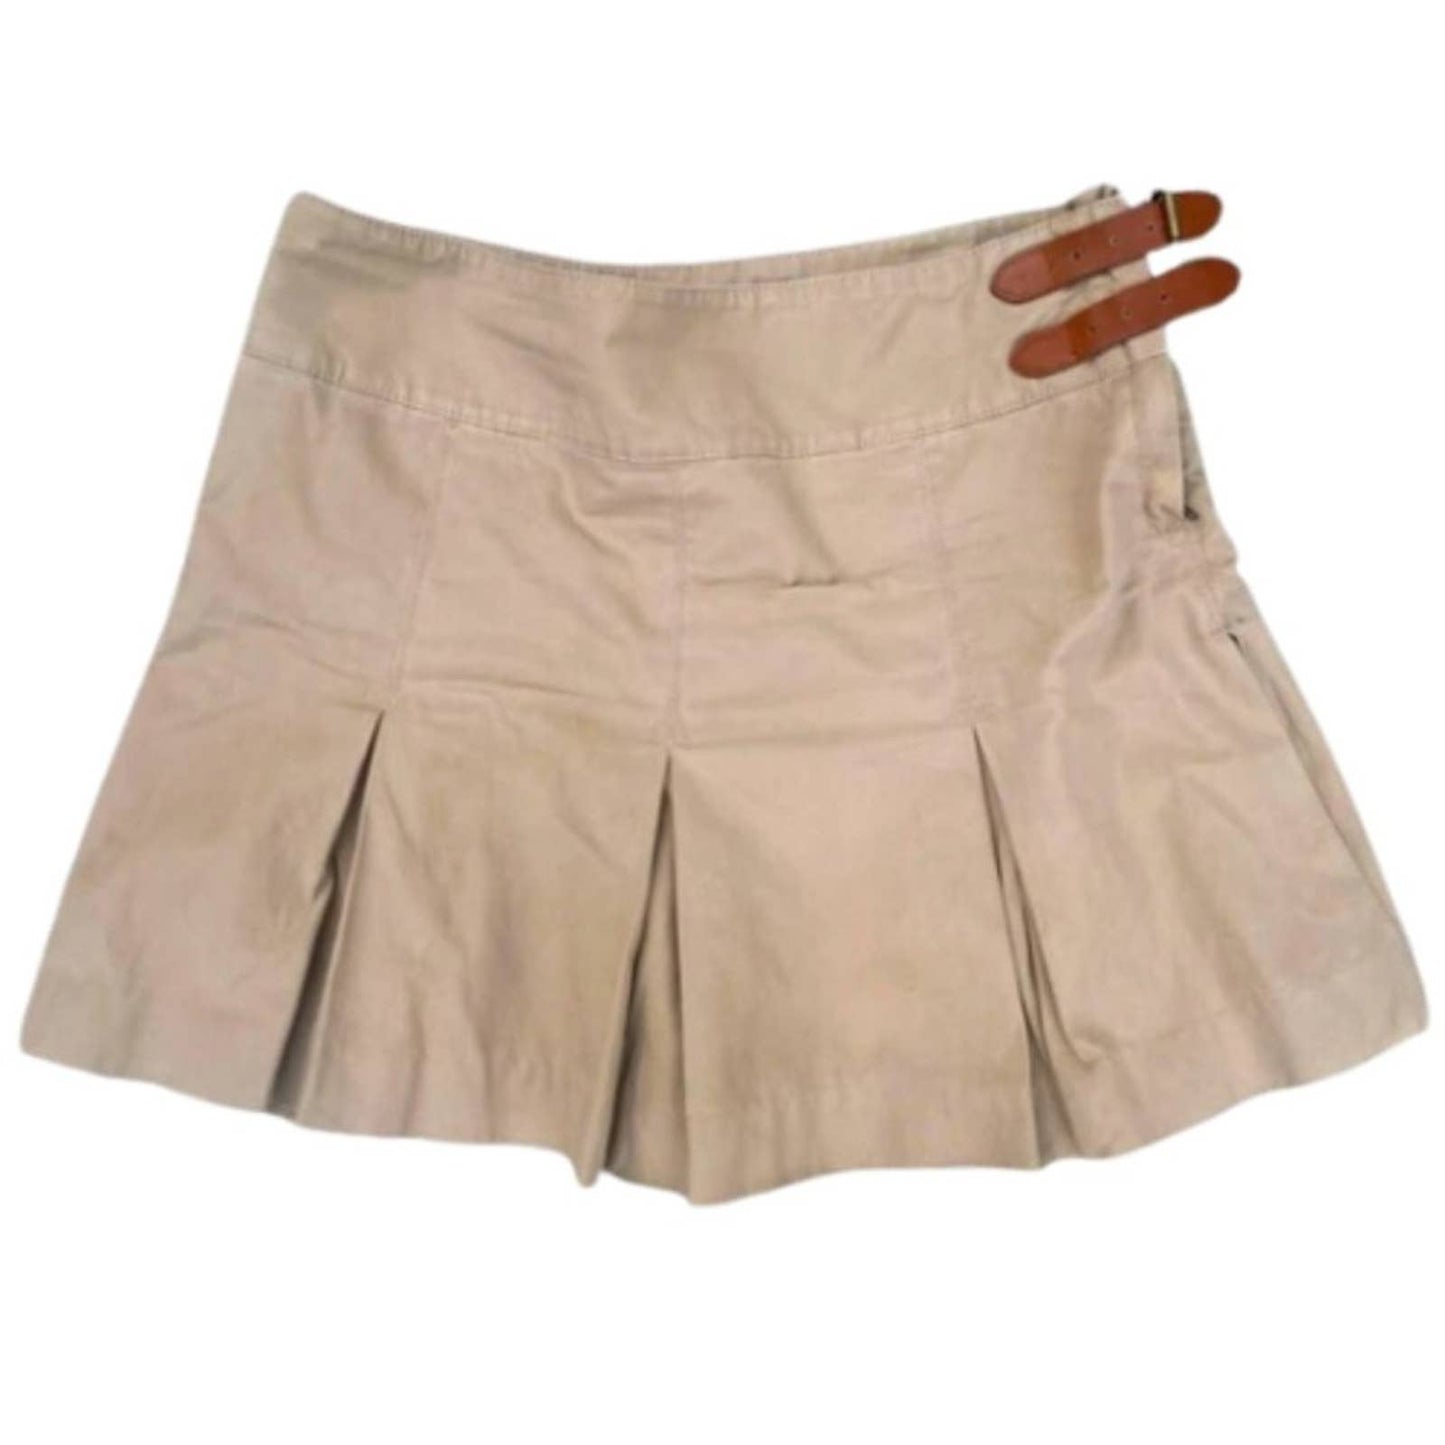 Ralph Lauren Preppy Buckle Skirt in Brit Taupe NWT Size 4